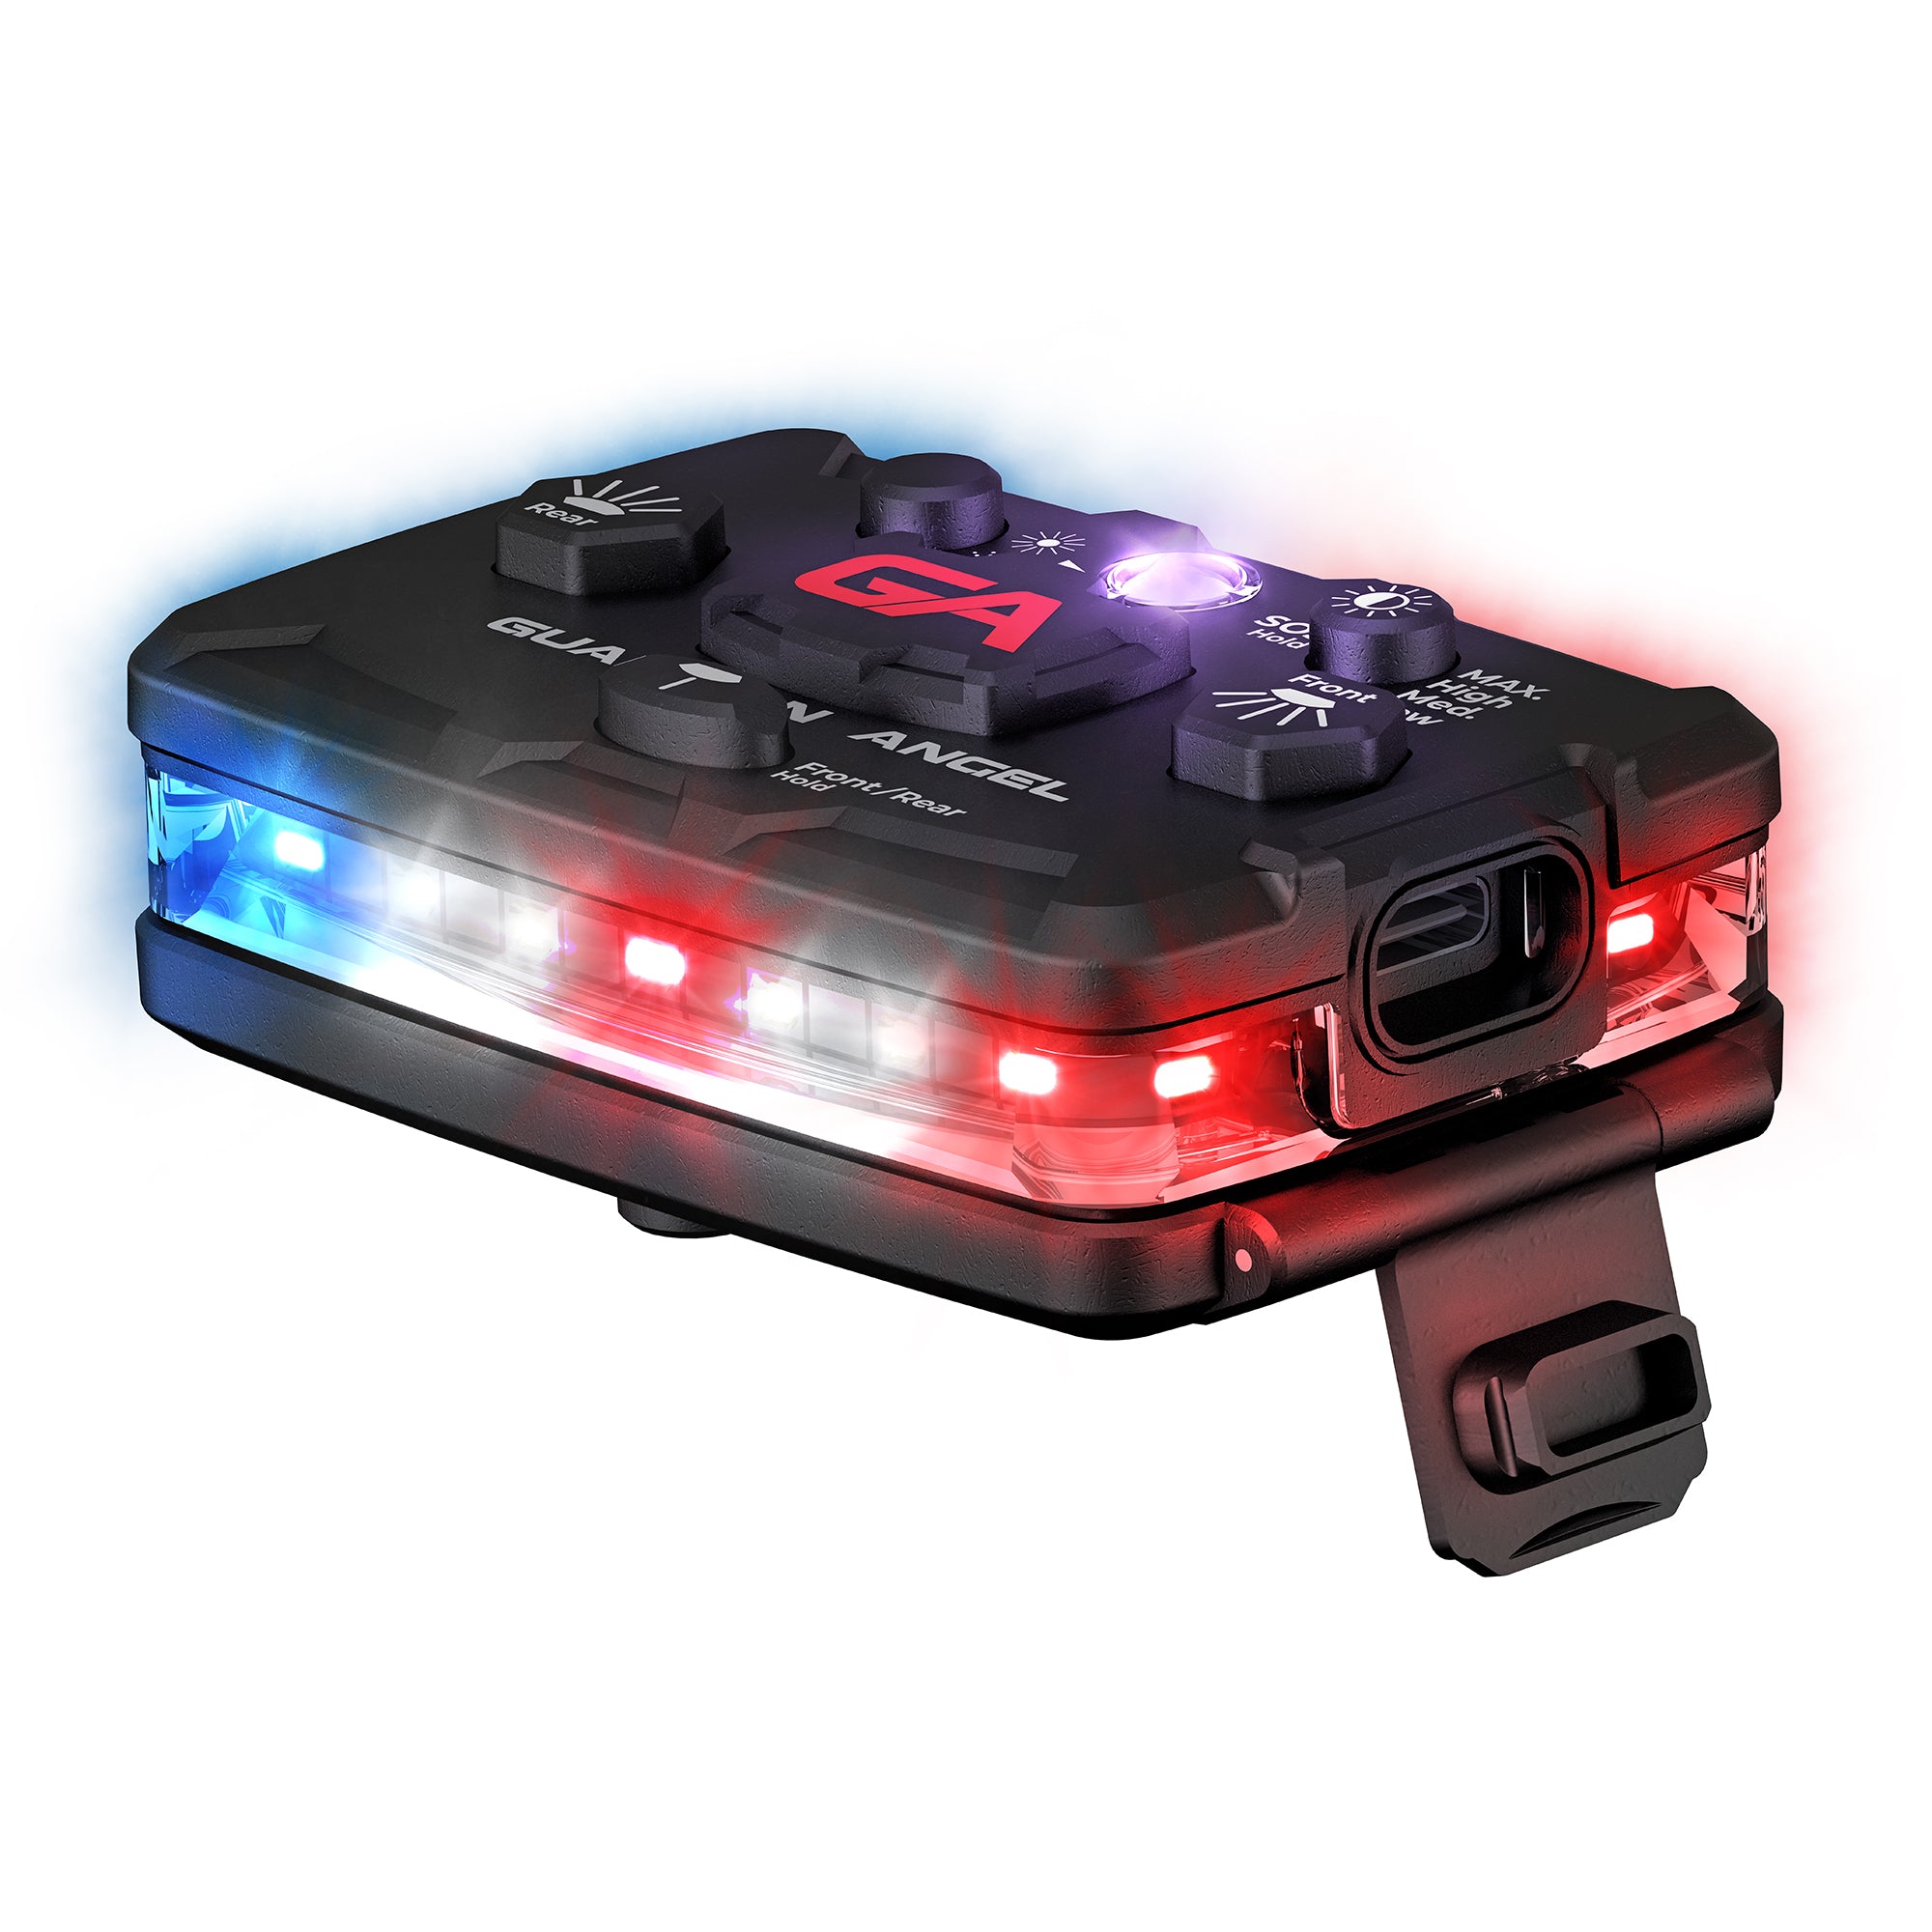 Guardian Angel Elite Red/Blue-Infrared Wearable Safety Light (ELT-R/B-IR)